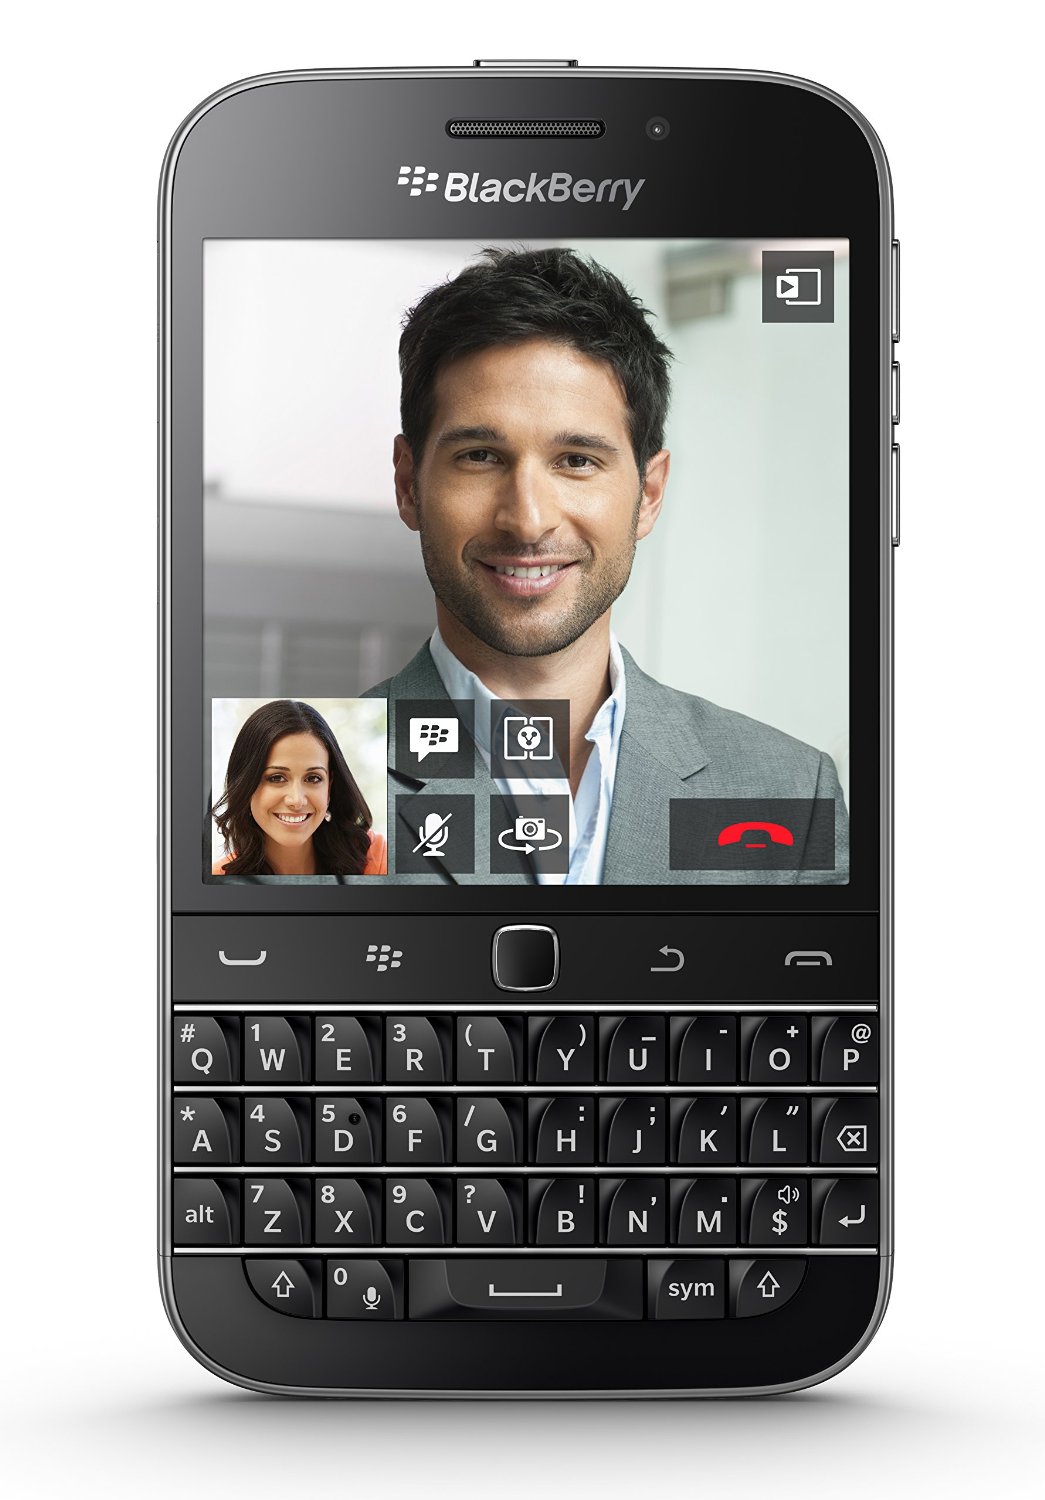 BlackBerry Blackberry Classic -  External Reviews